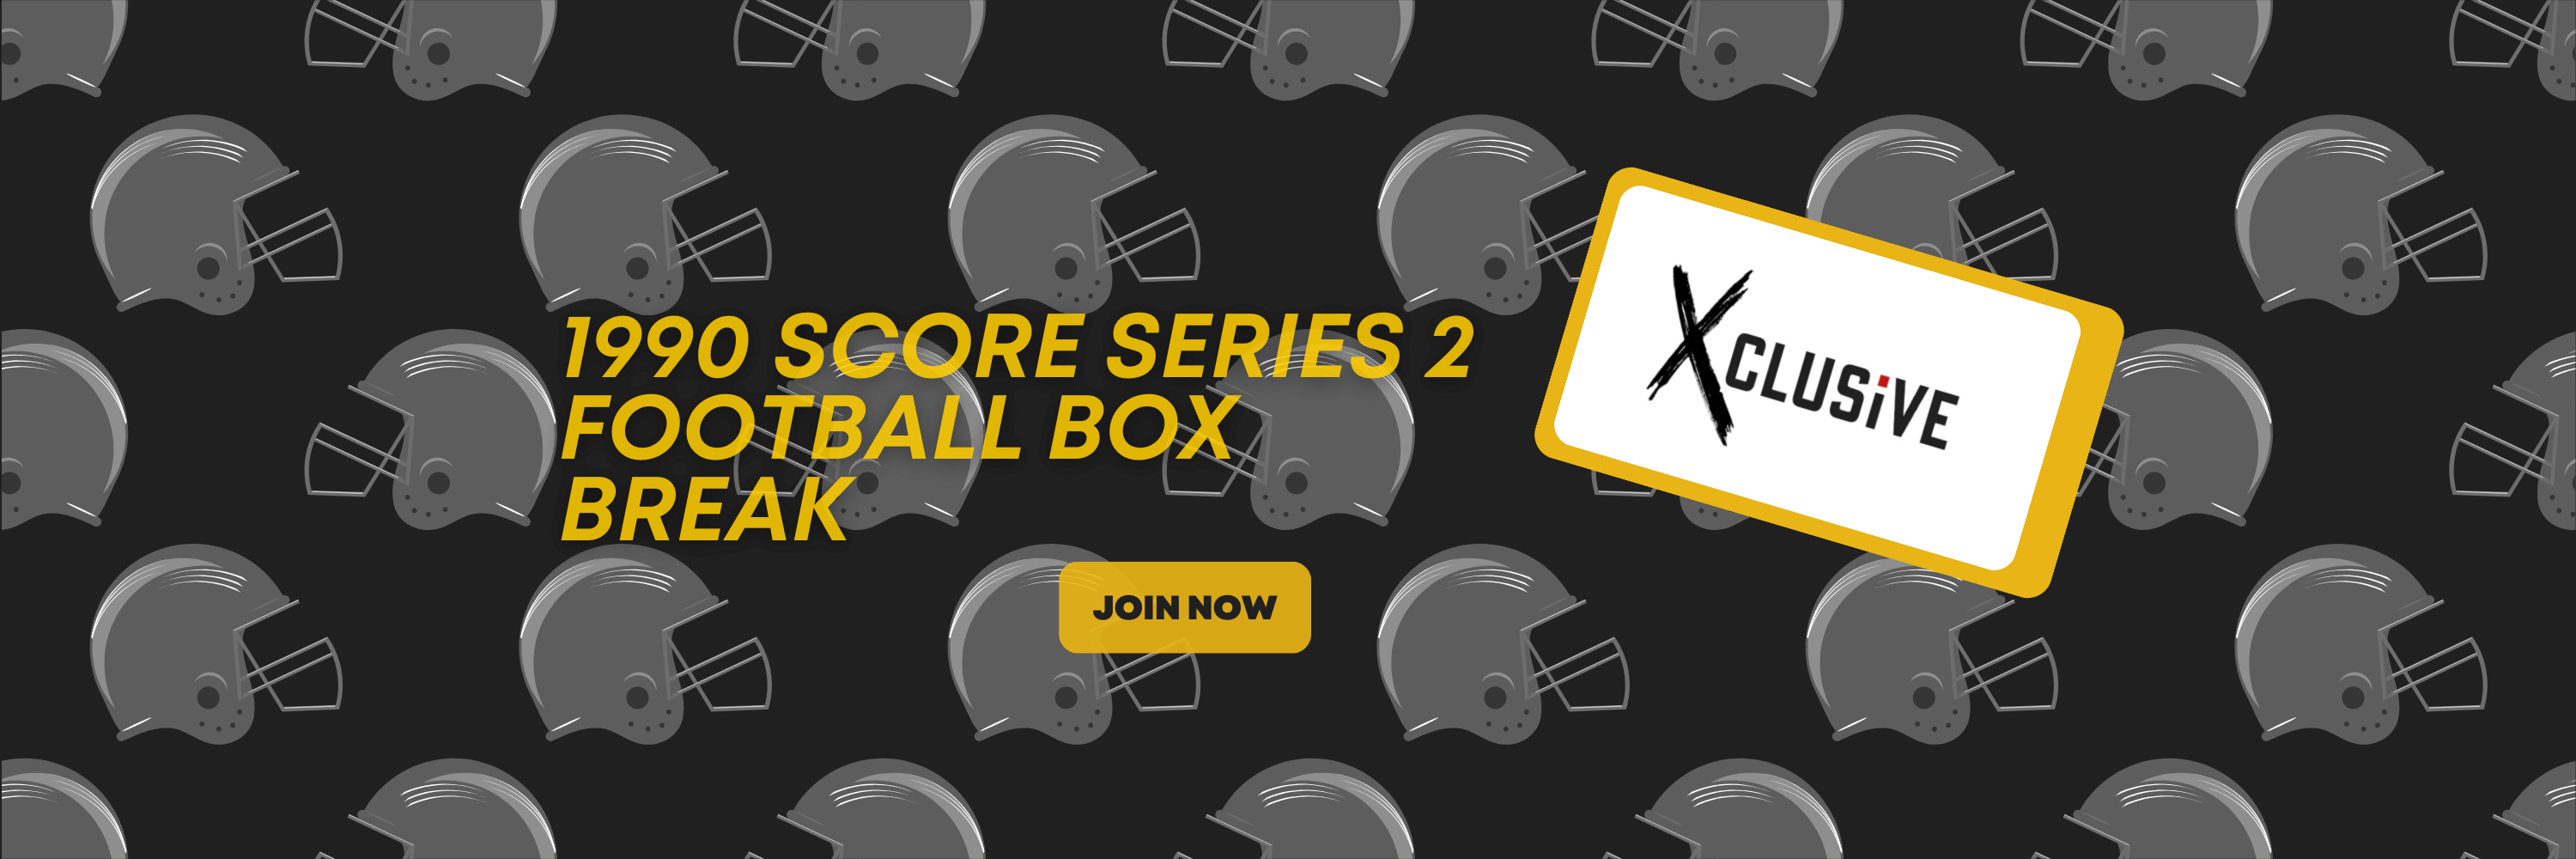 Unboxing 1990 Score Series 2 Football Box Break – See What’s Inside!